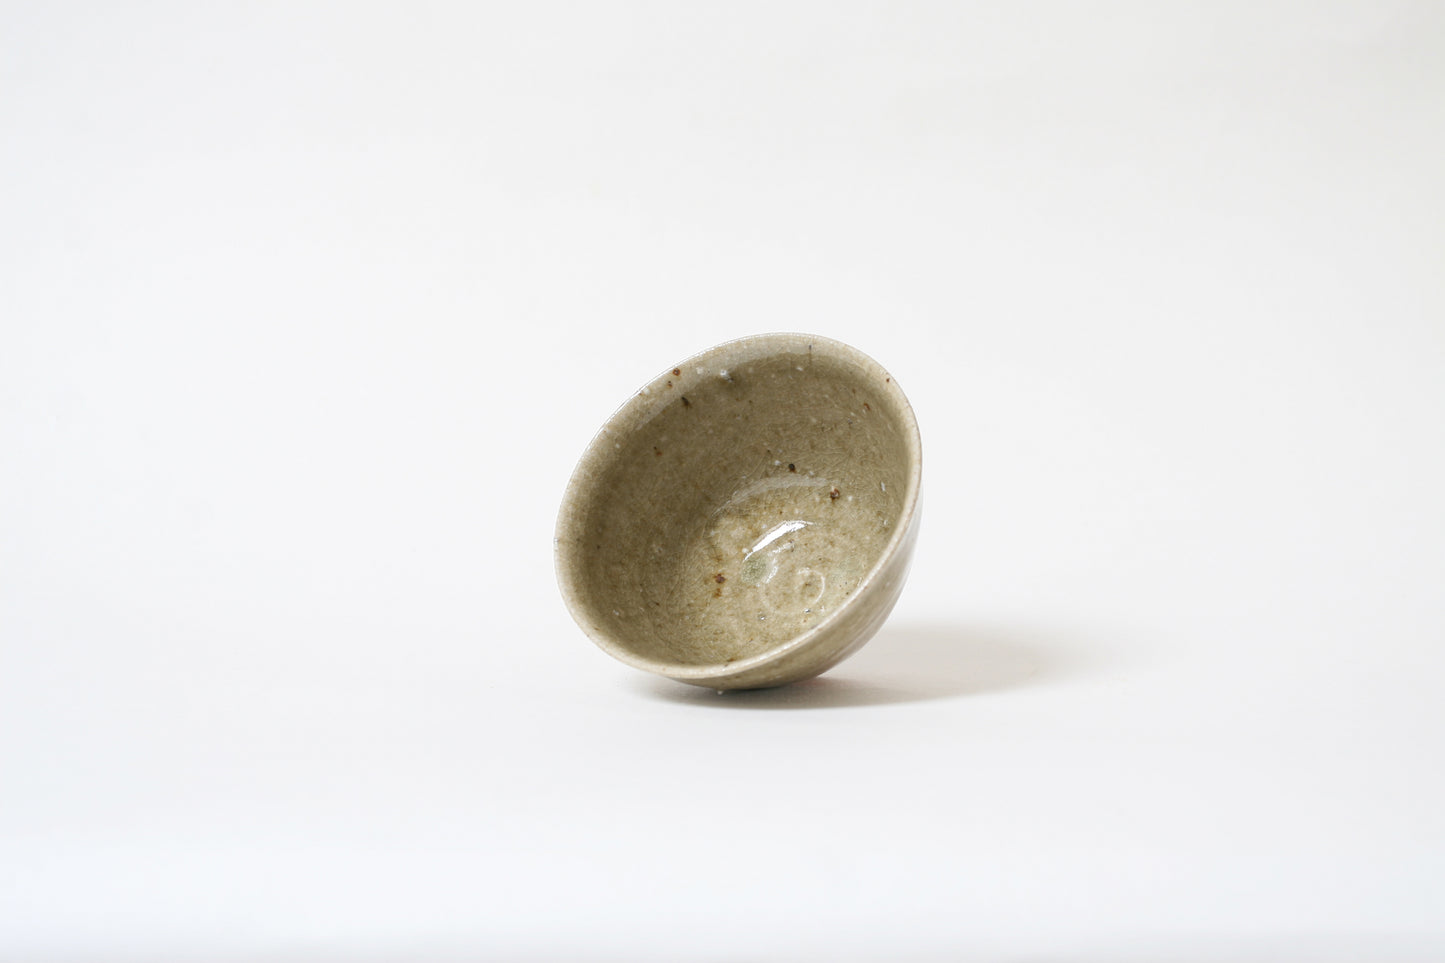 Celadon Tea Bowl by Linda Unsworth